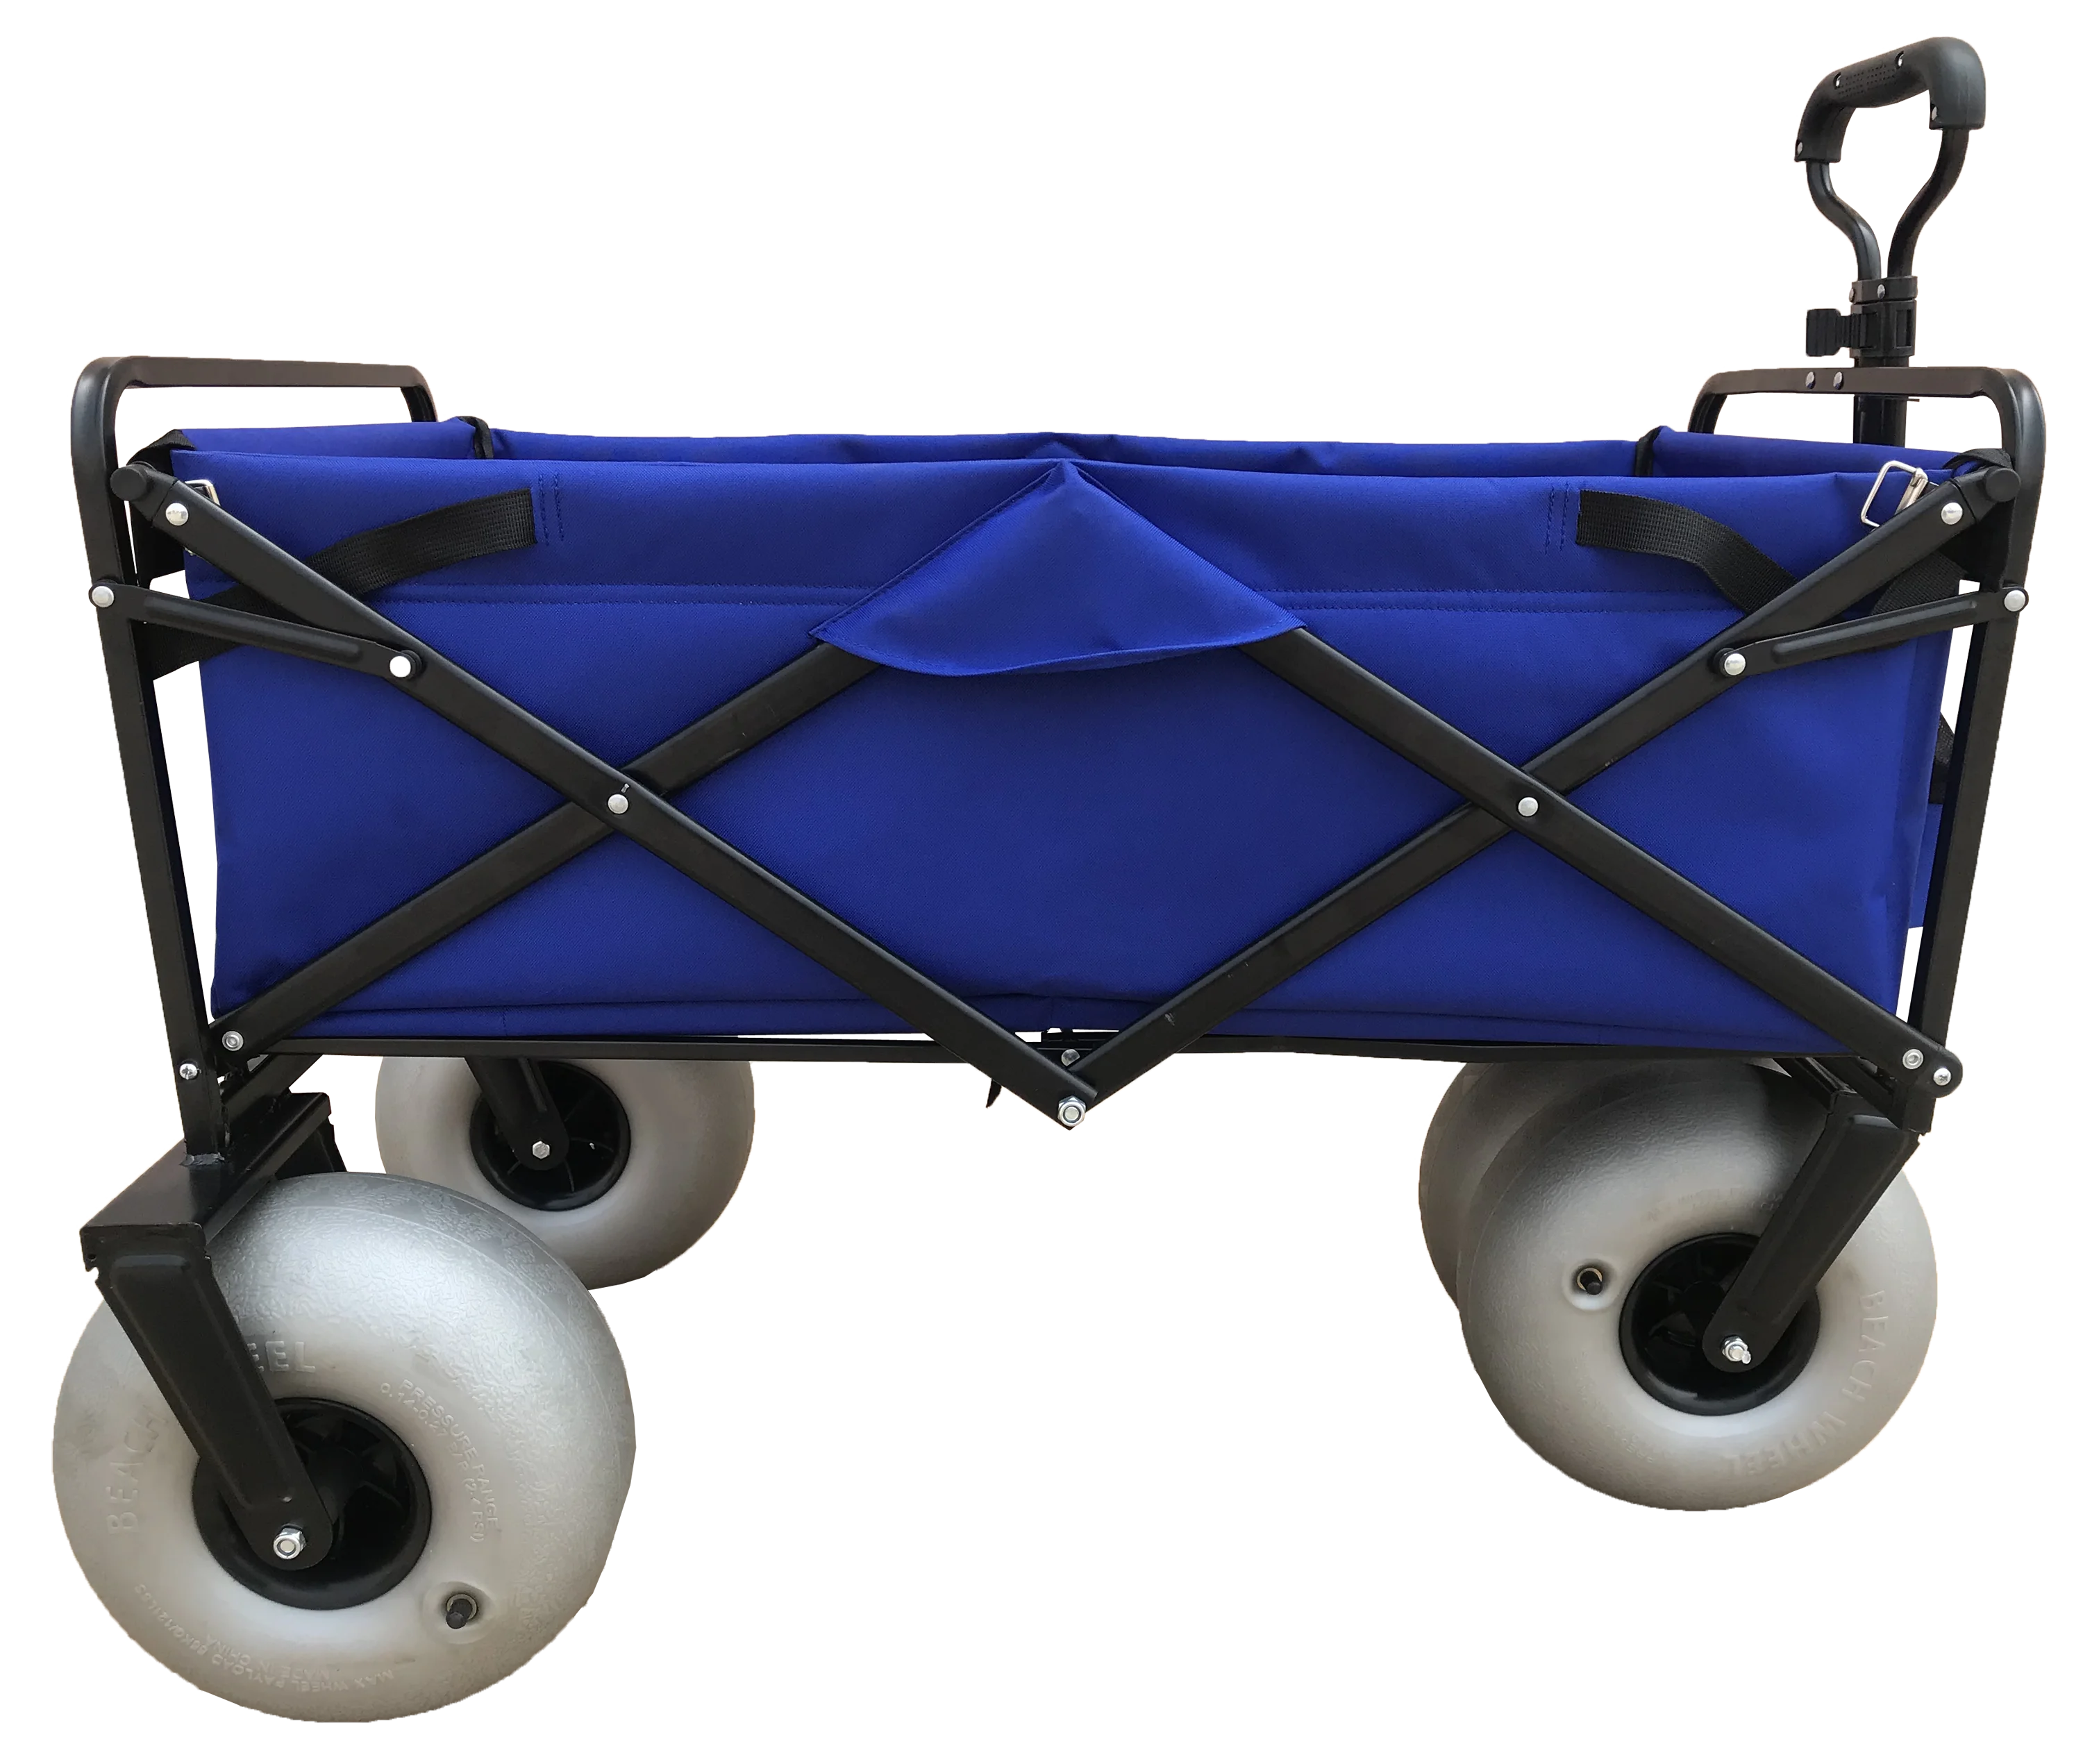 Blue Factory Wagon Cart Garden Utility Cart Beach Collapsible Folding Camping Trolley 